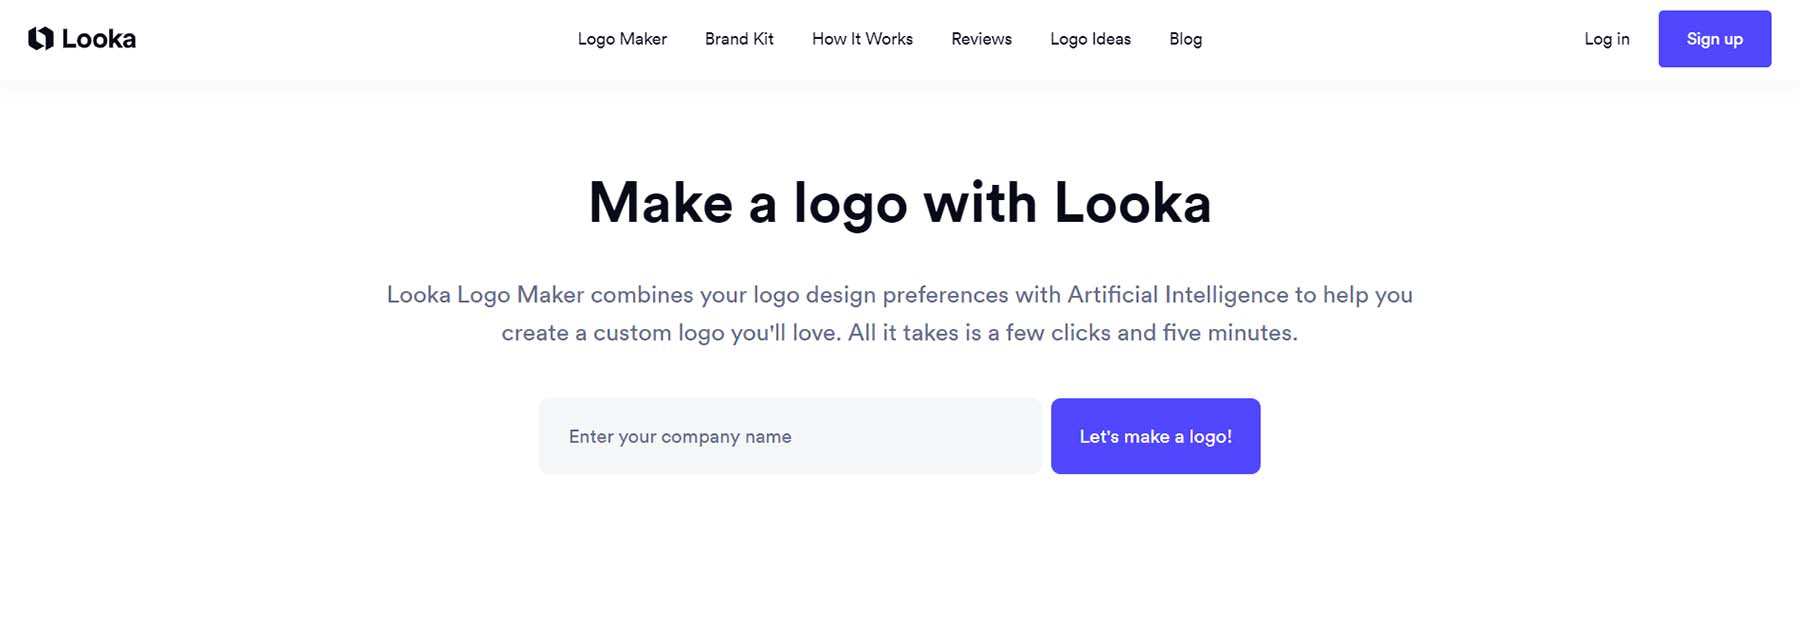 Best Free Logo Maker: 7 Online Tools and Apps for Logo Design